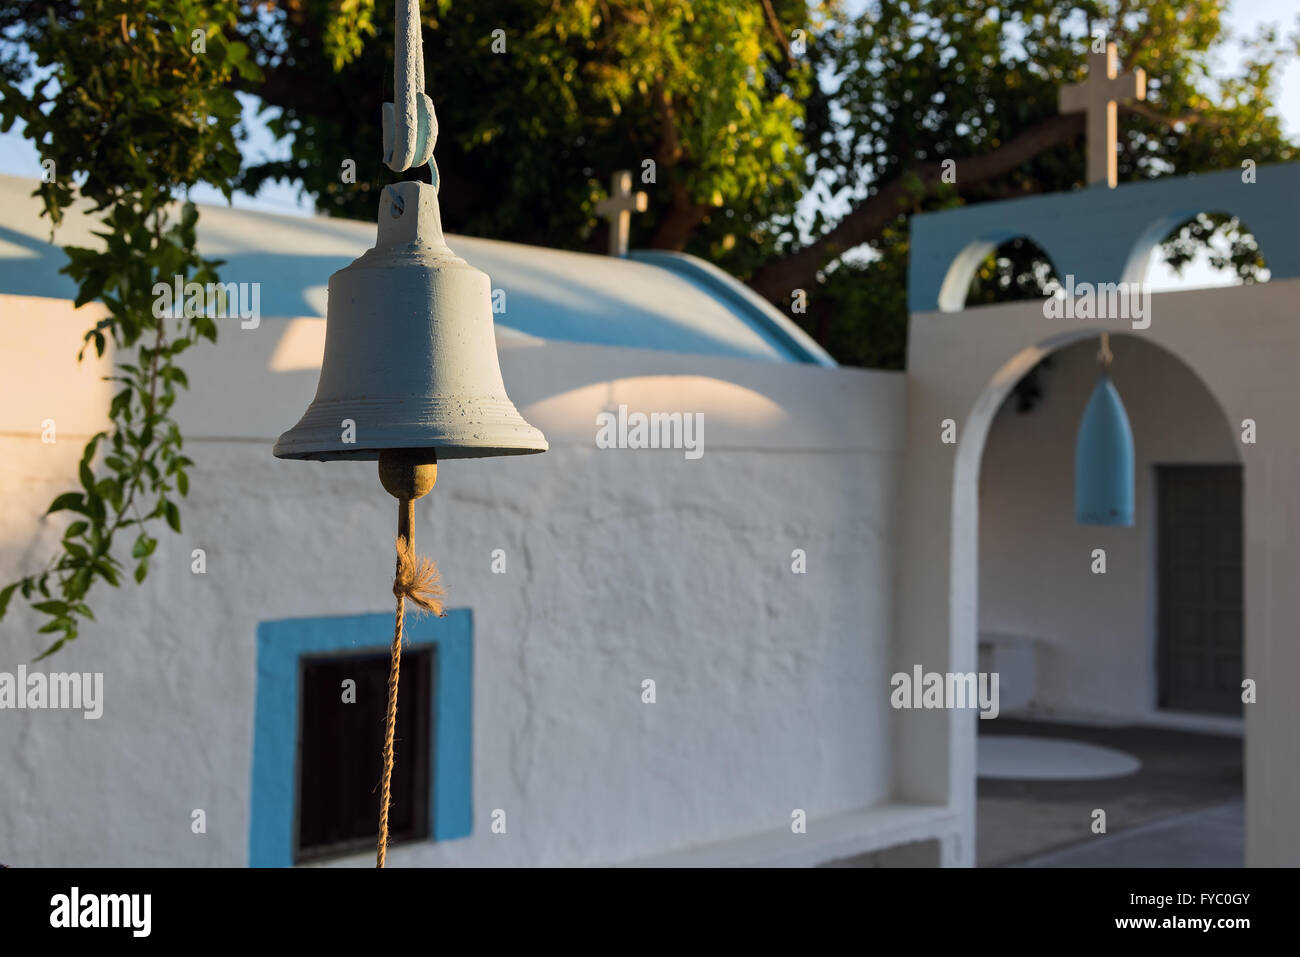 Traditionelle Kirchlein bei Sonnenuntergang in Insel Kos, Griechenland Stockfoto